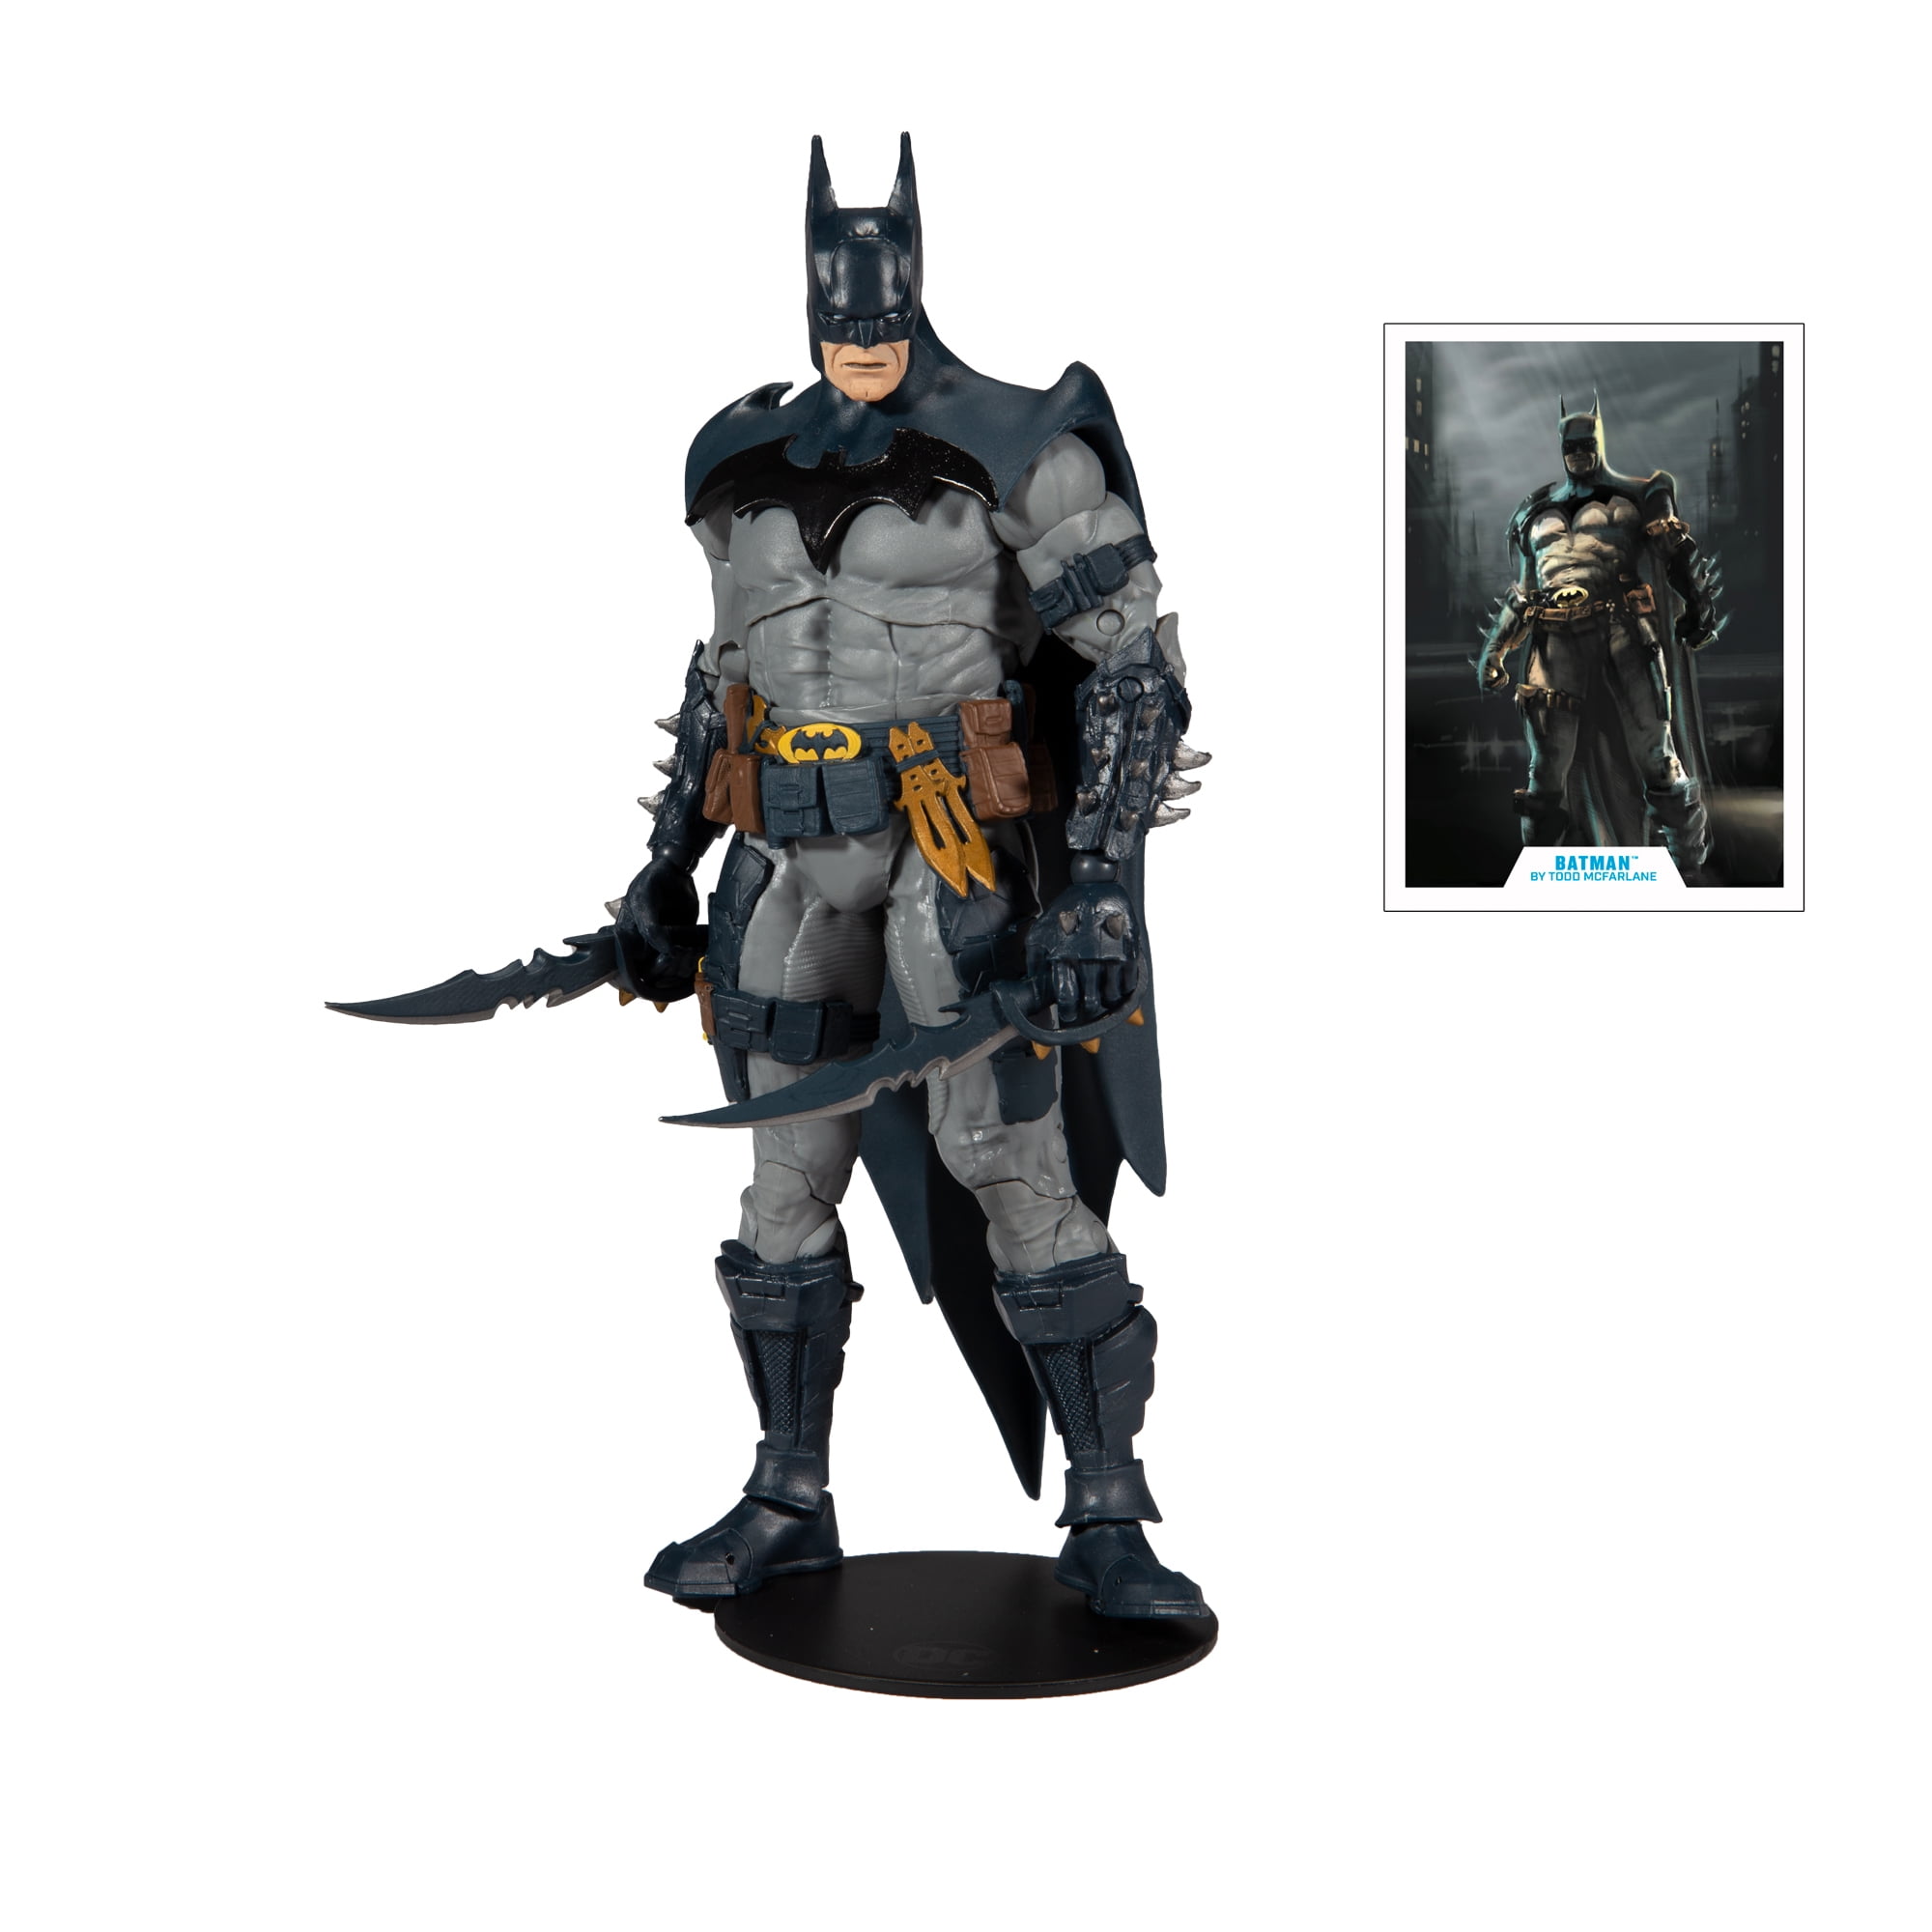 Details about   DC Todd McFarlane 7" Figure Batman Gold Label Series Walmart Exclusive 